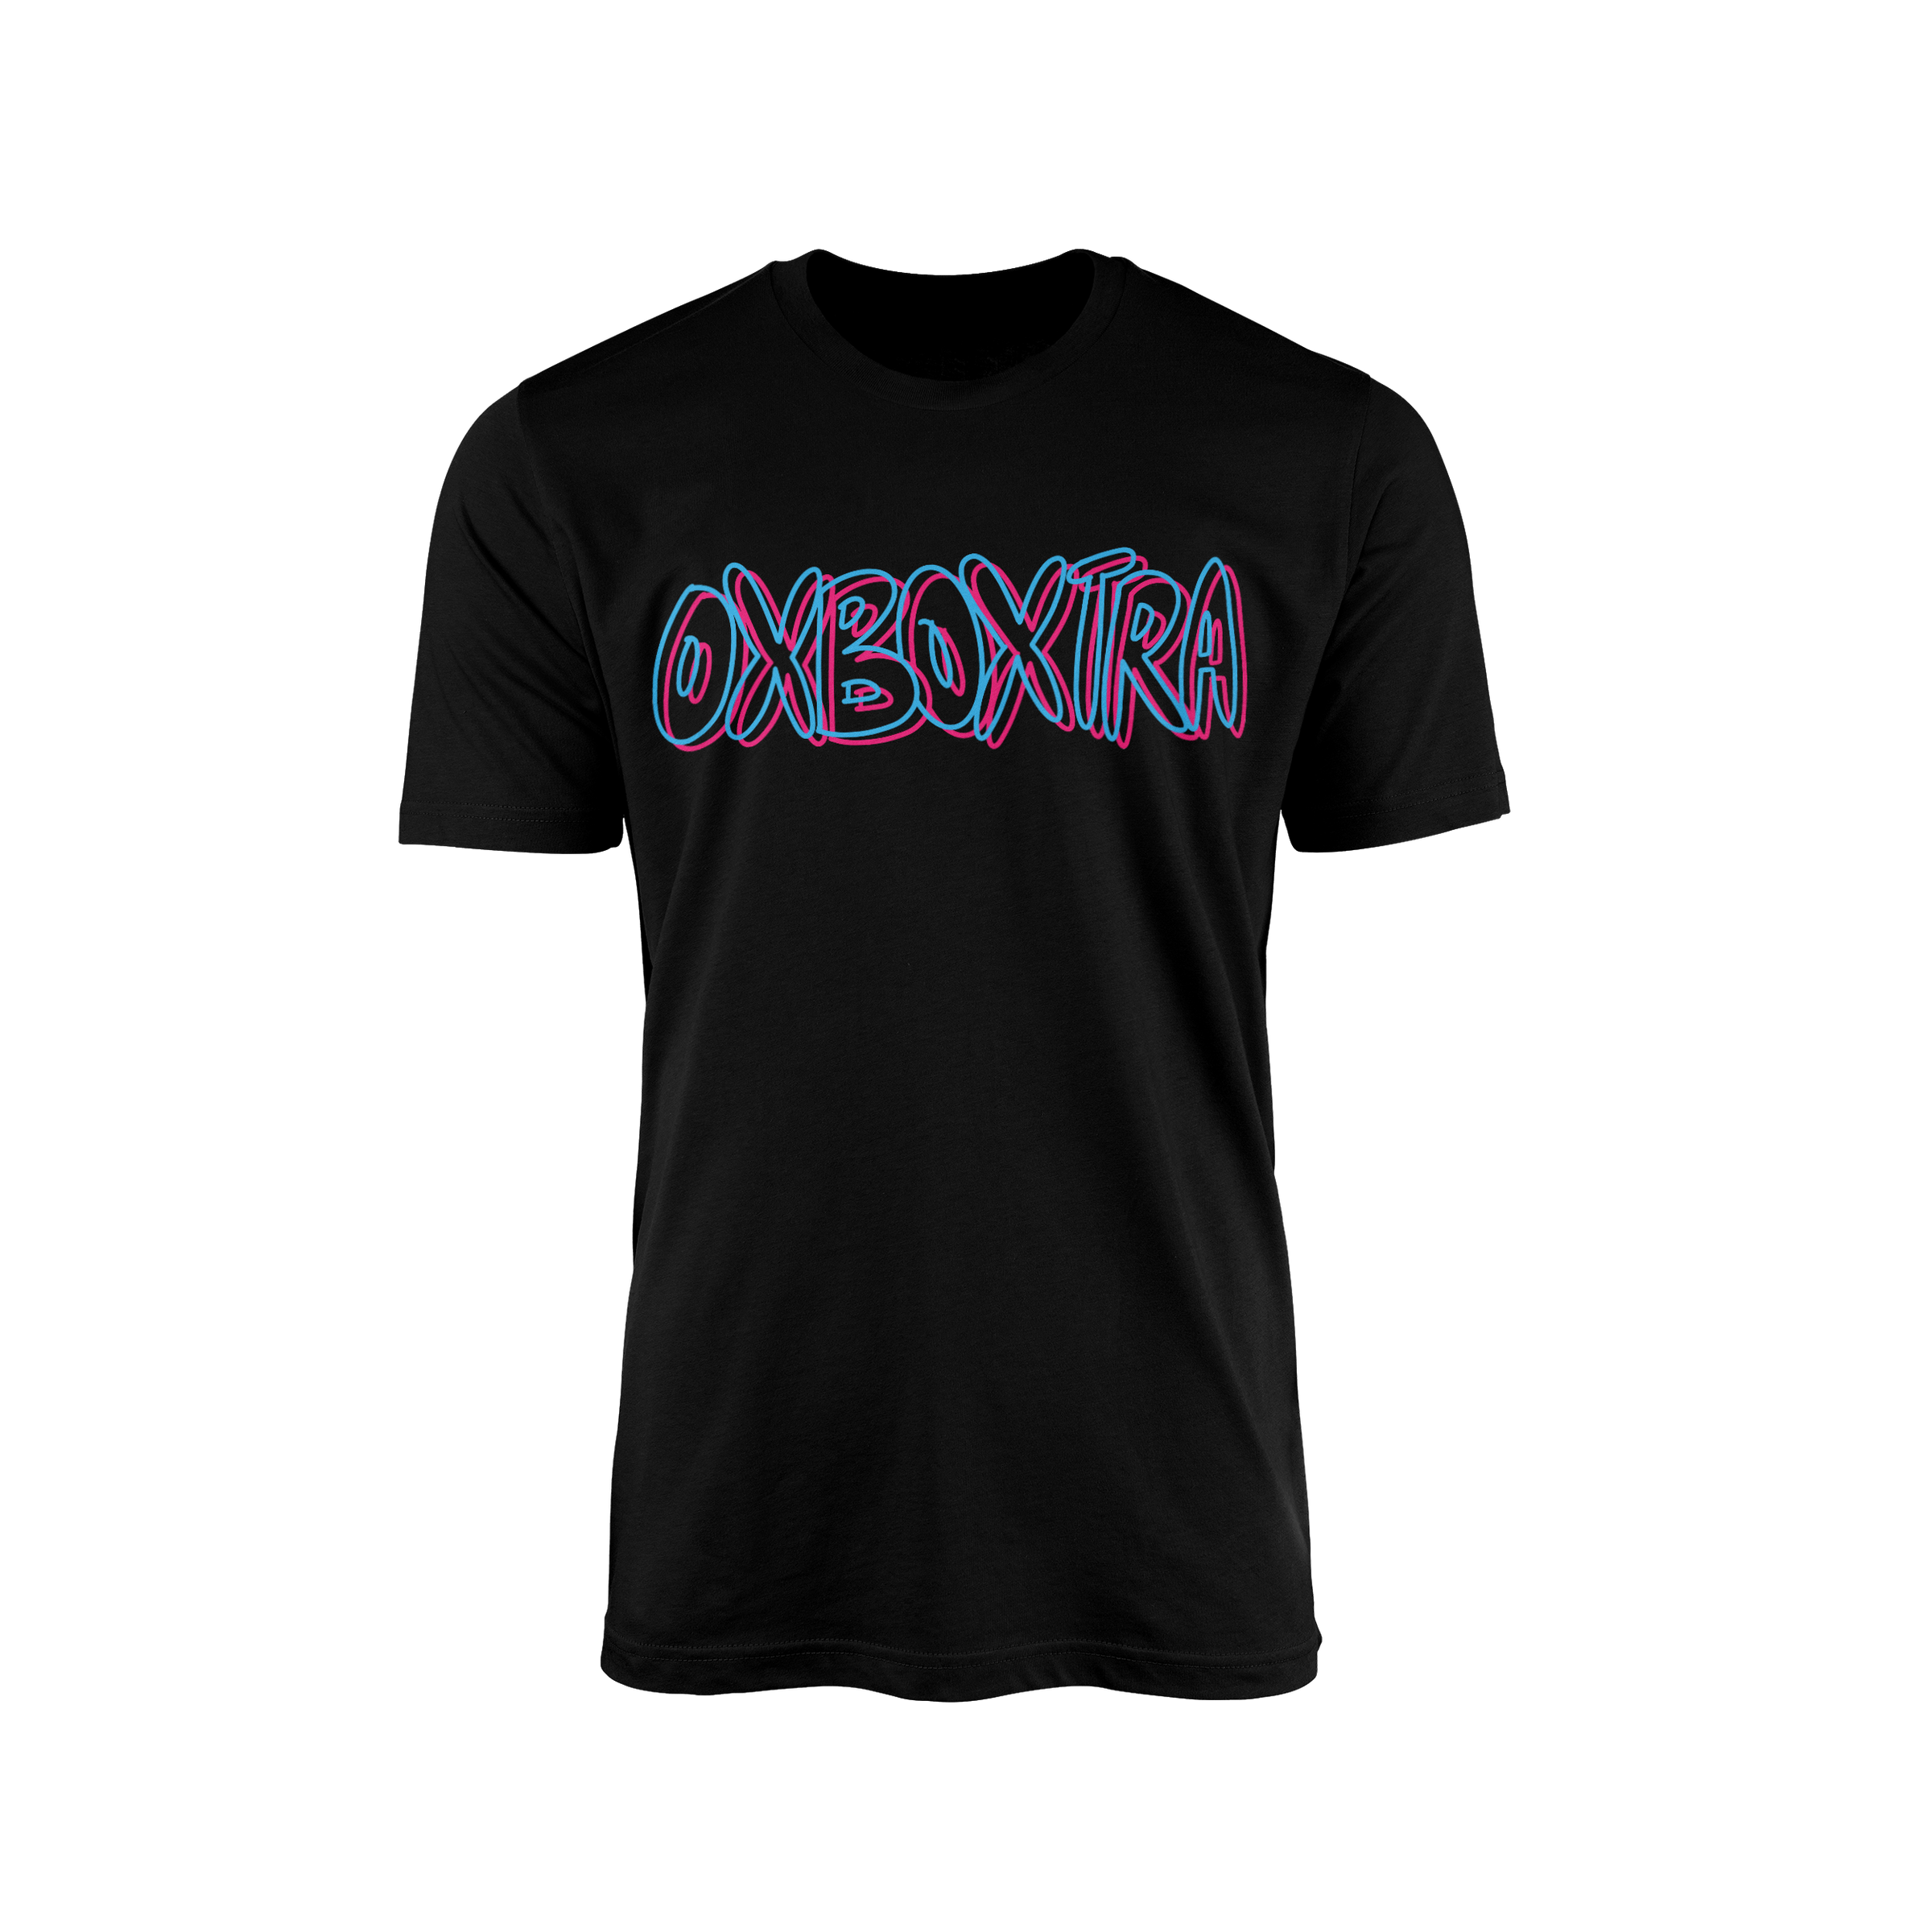 OXBOXTRA T-Shirt